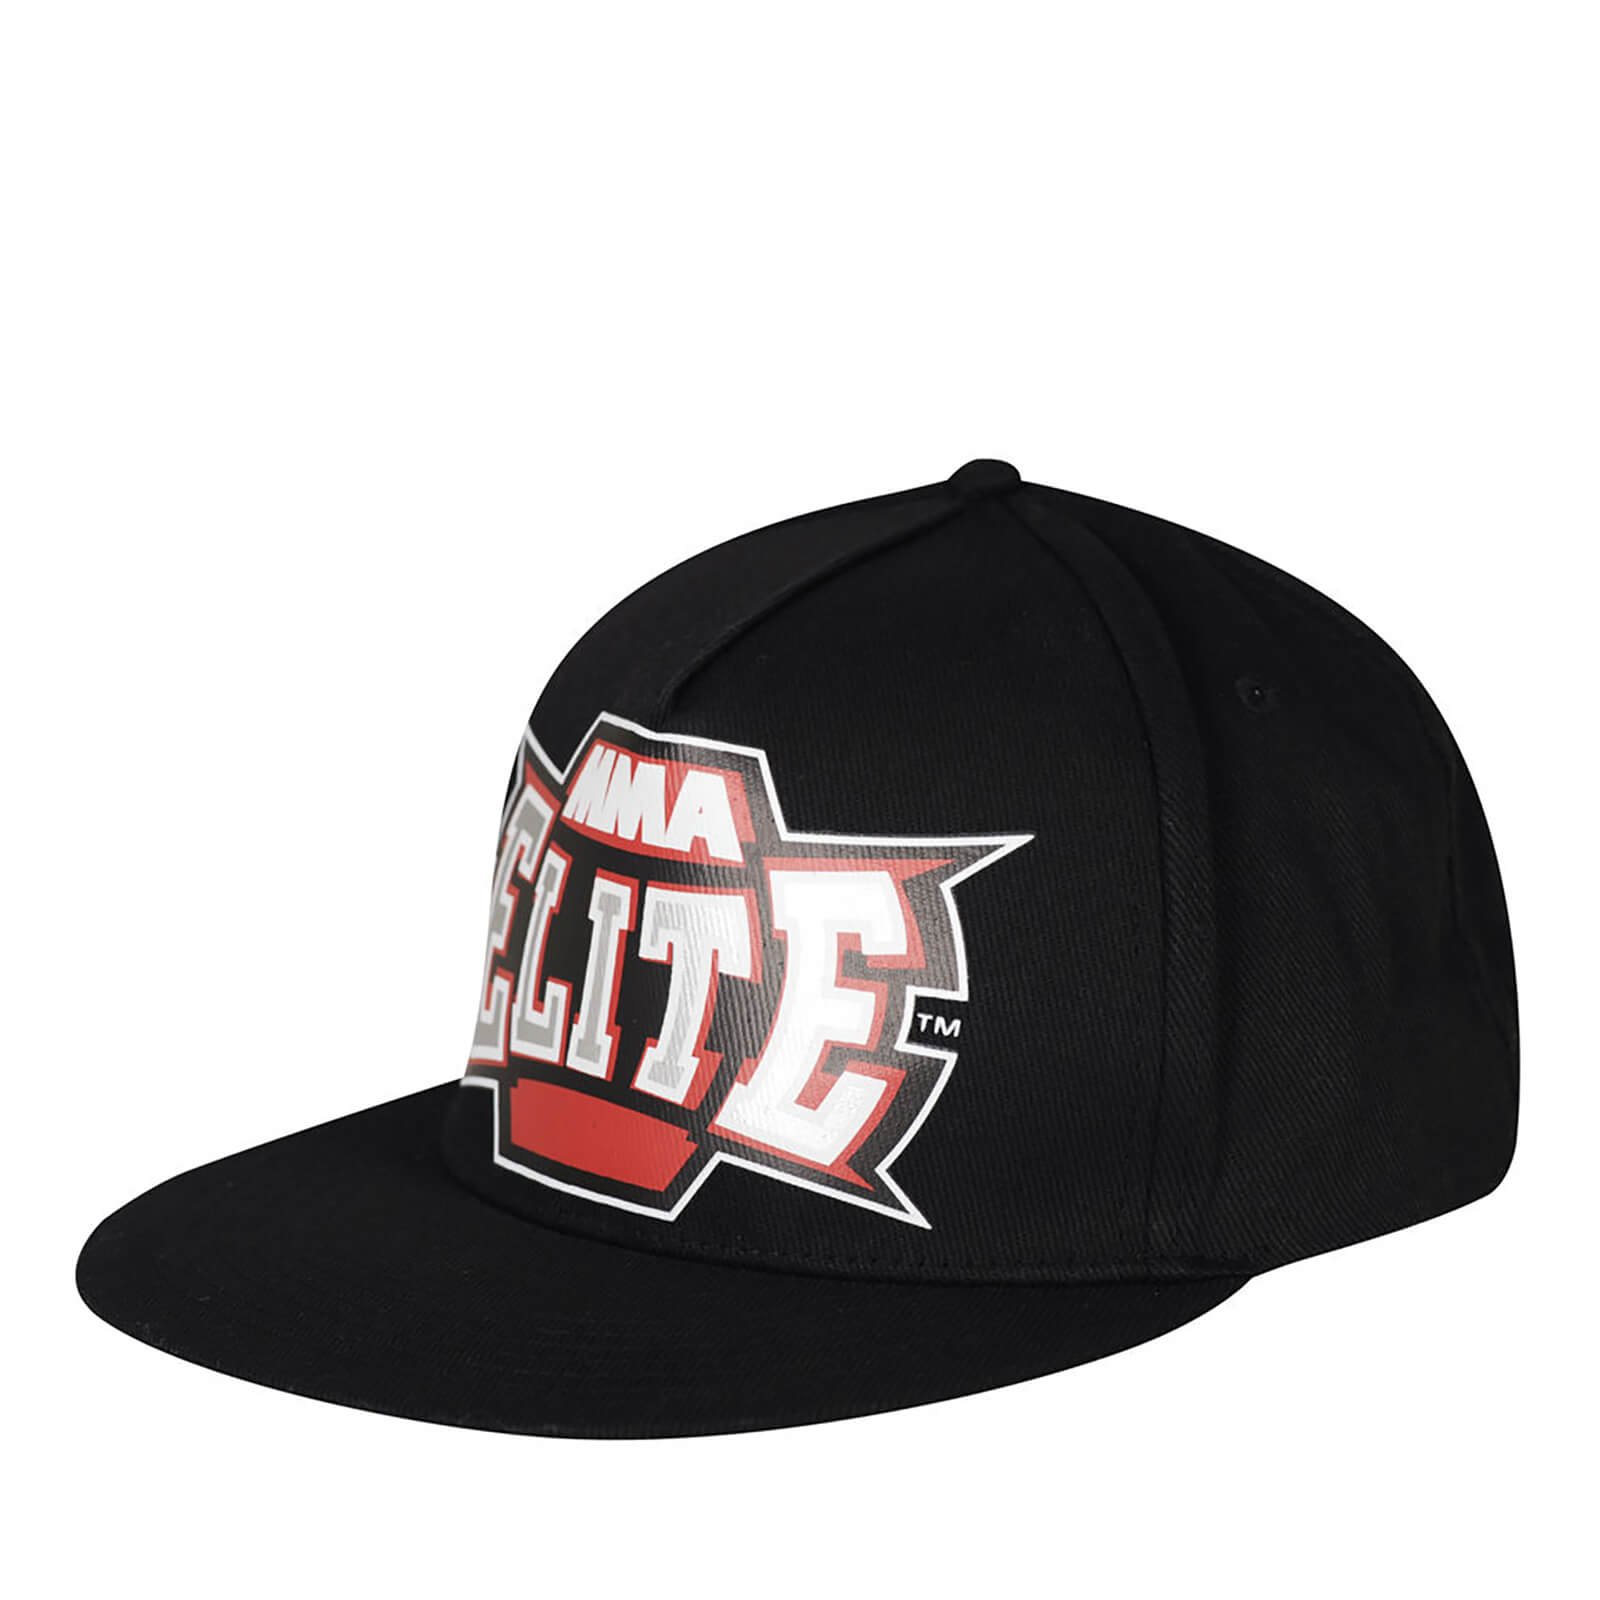 MMA Elite Men's Steak Cap - Black - One Size Clothing | Zavvi